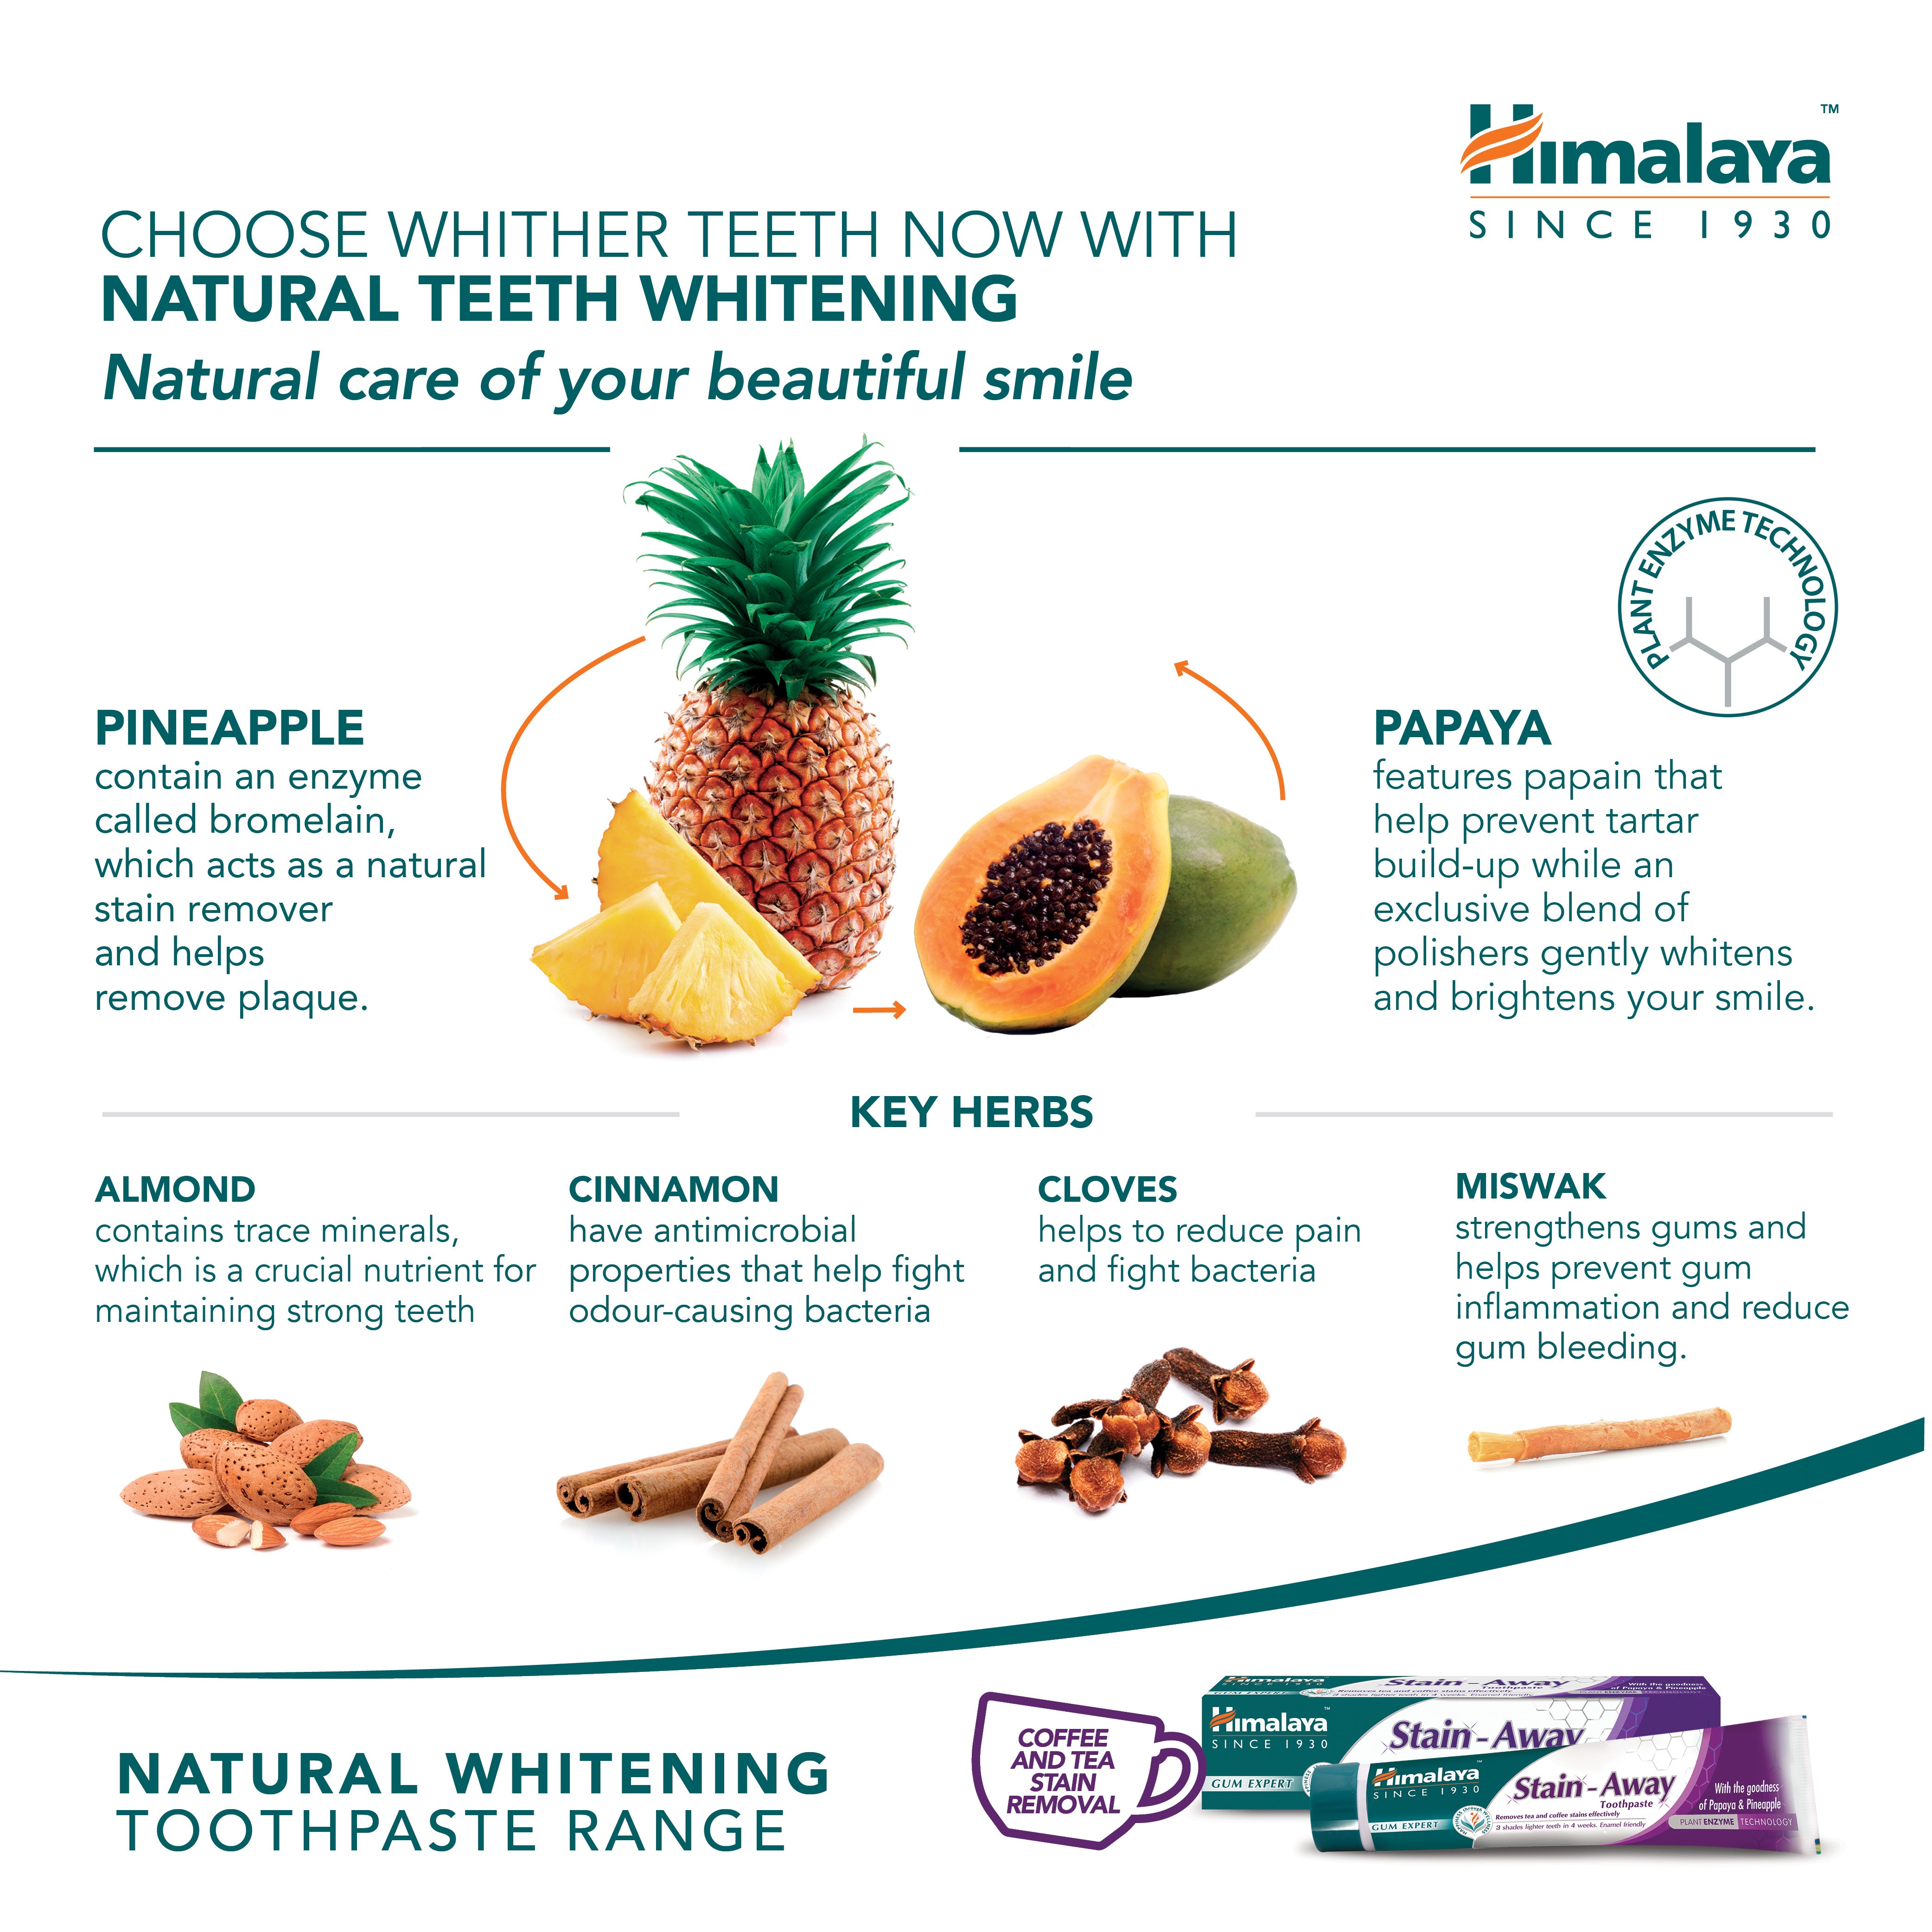 Himalaya Gum Expert Herbal Toothpaste - Stain Away - 75ml (Pack of 3)